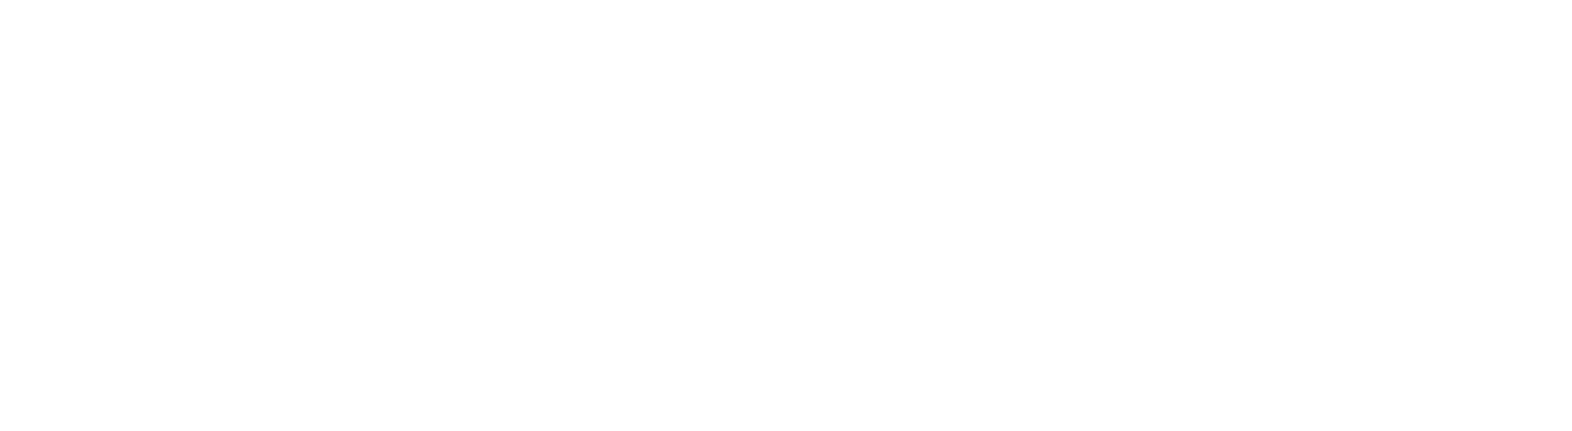 Alkaline Water Company logo grand pour les fonds sombres (PNG transparent)